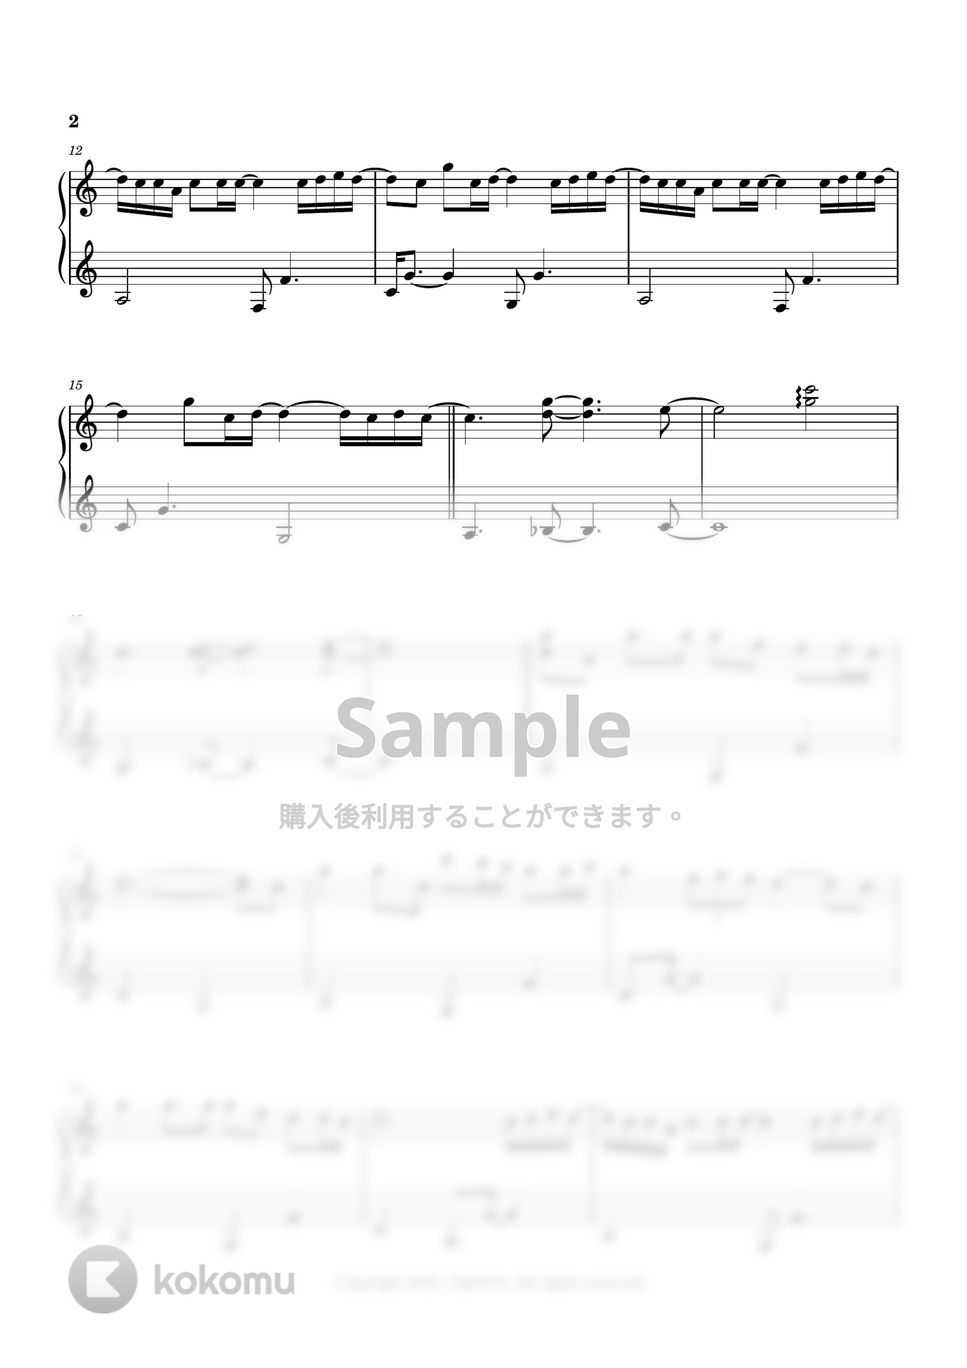 RADWIMPS - かたわれ時(Katawaredoki) (君の名は ost track 23) by 今日ピアノ(Oneul Piano)